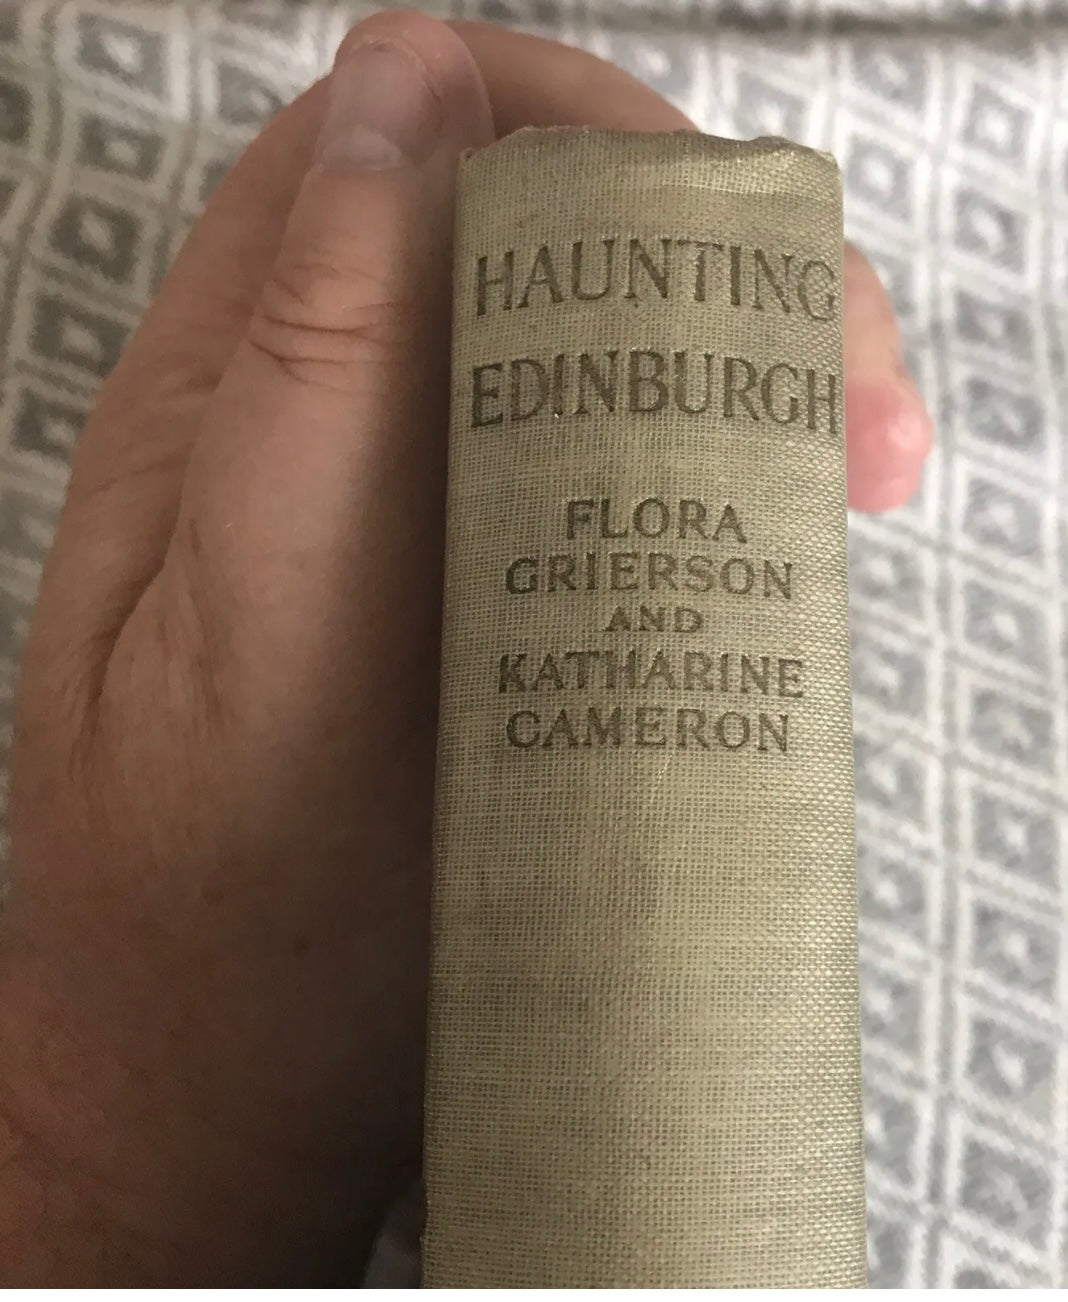 1929*1st* Haunting Edinburgh - Flora Grierson(Katharine Cameron Illust) Bodley Head Honeyburn Books (UK)